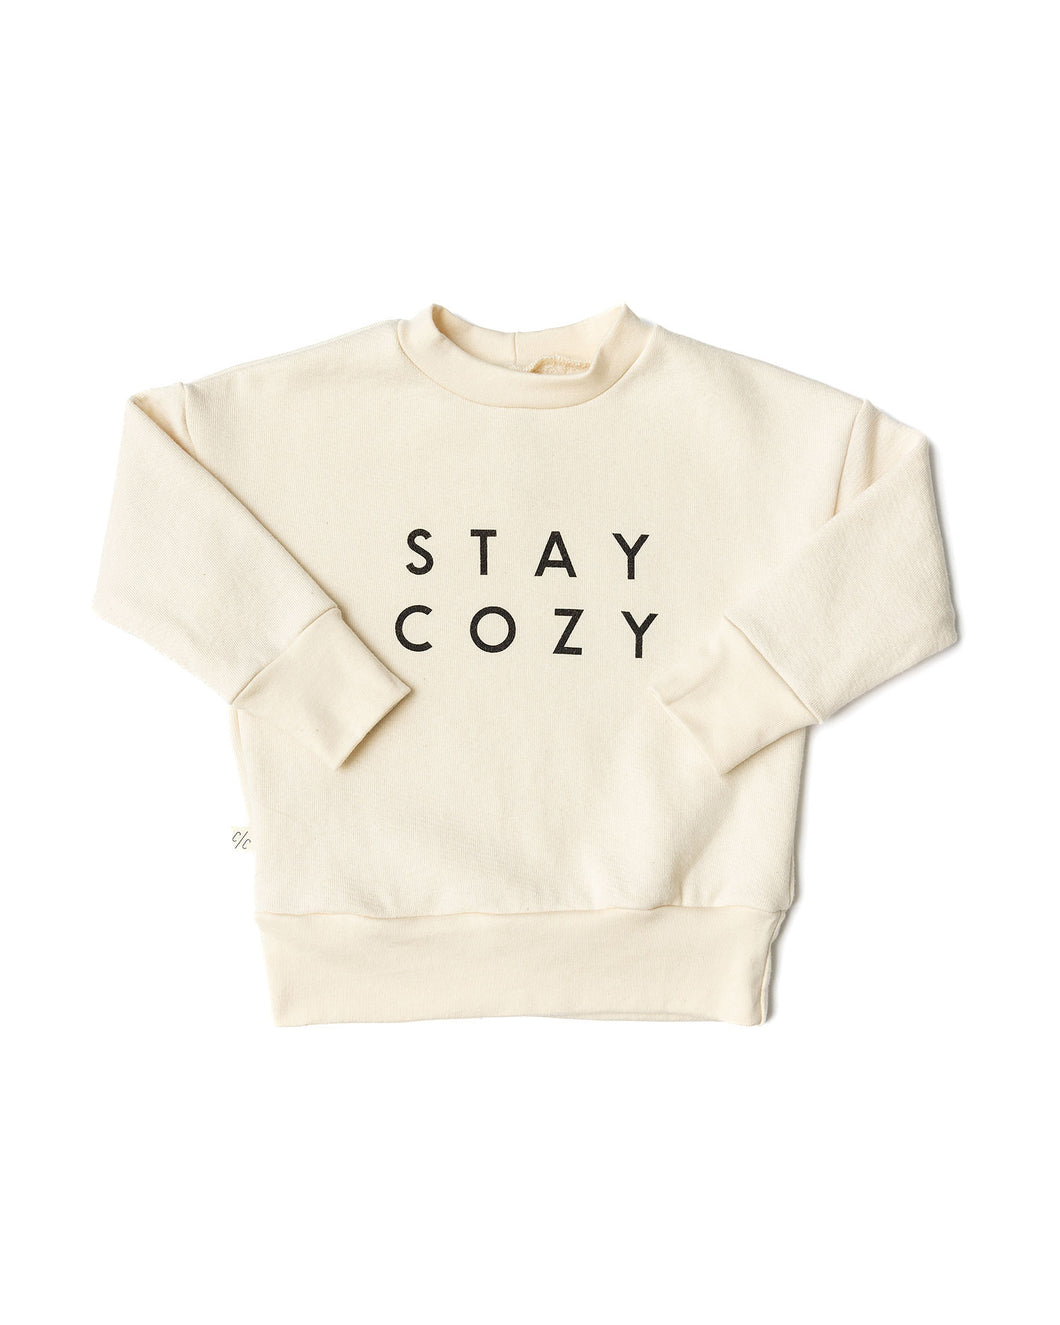 boxy sweatshirt - stay cozy on natural